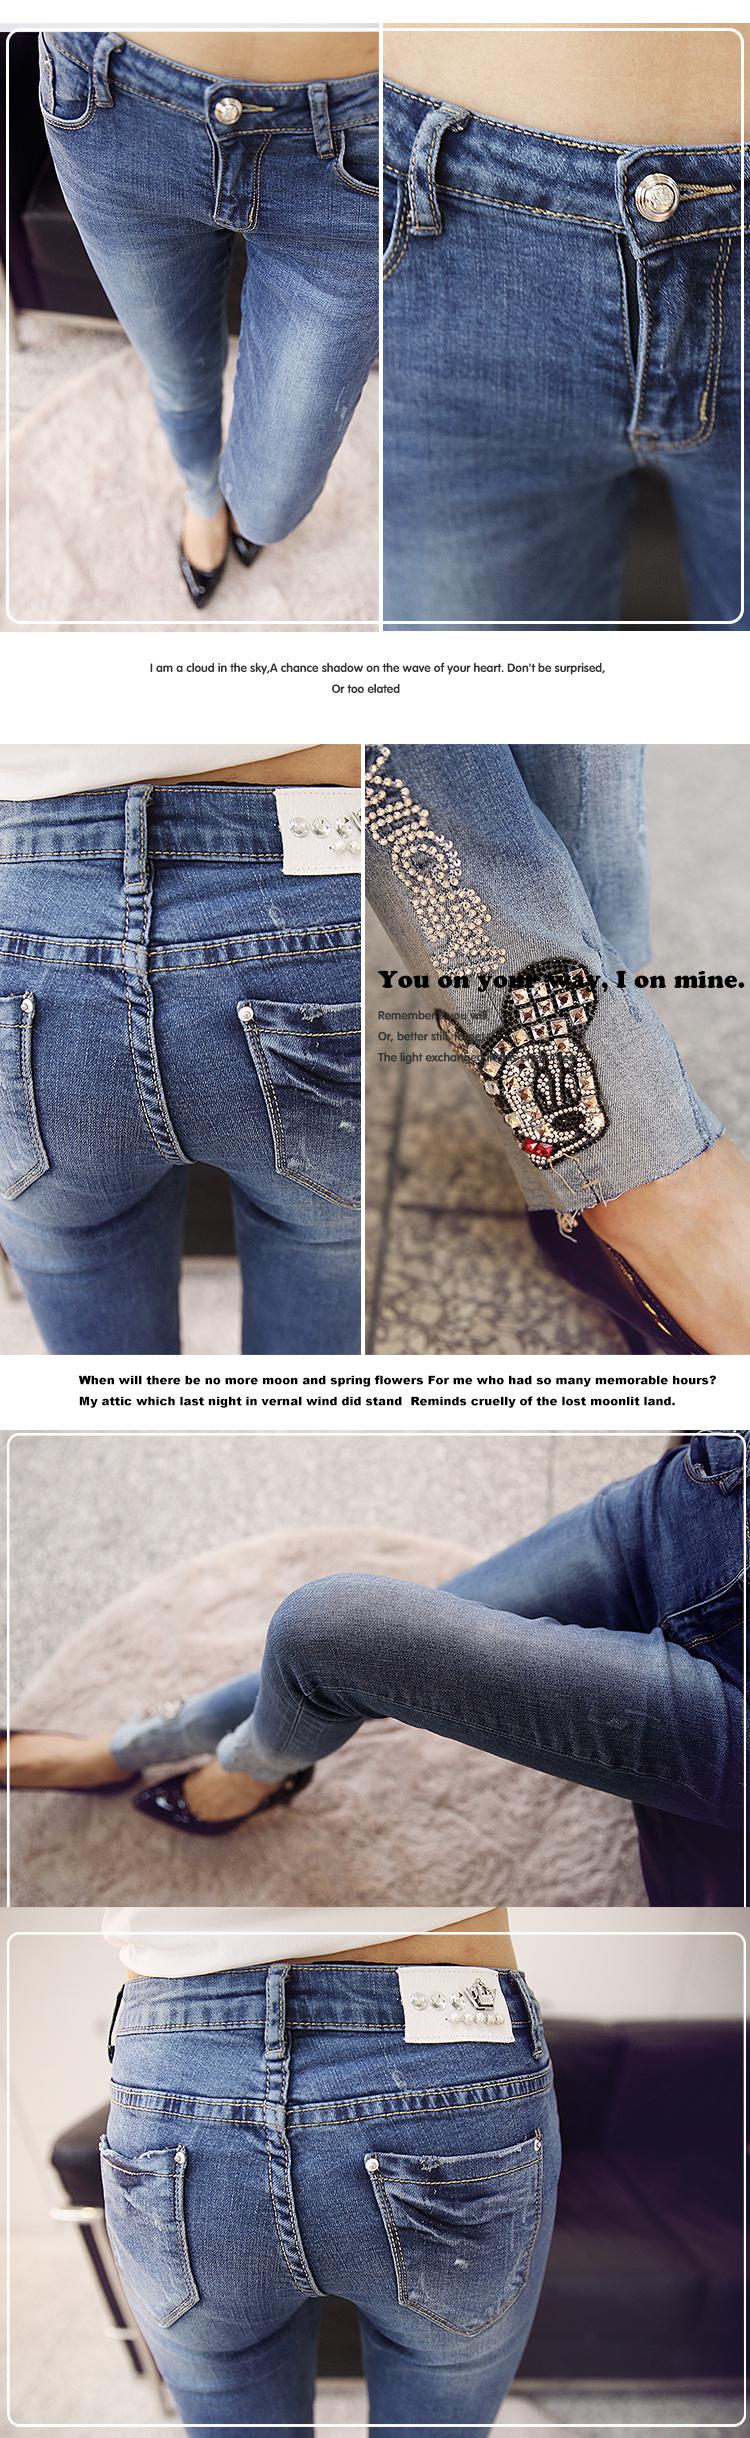 mssefn2014新款韩版带钻女式牛仔长裤 A007G04